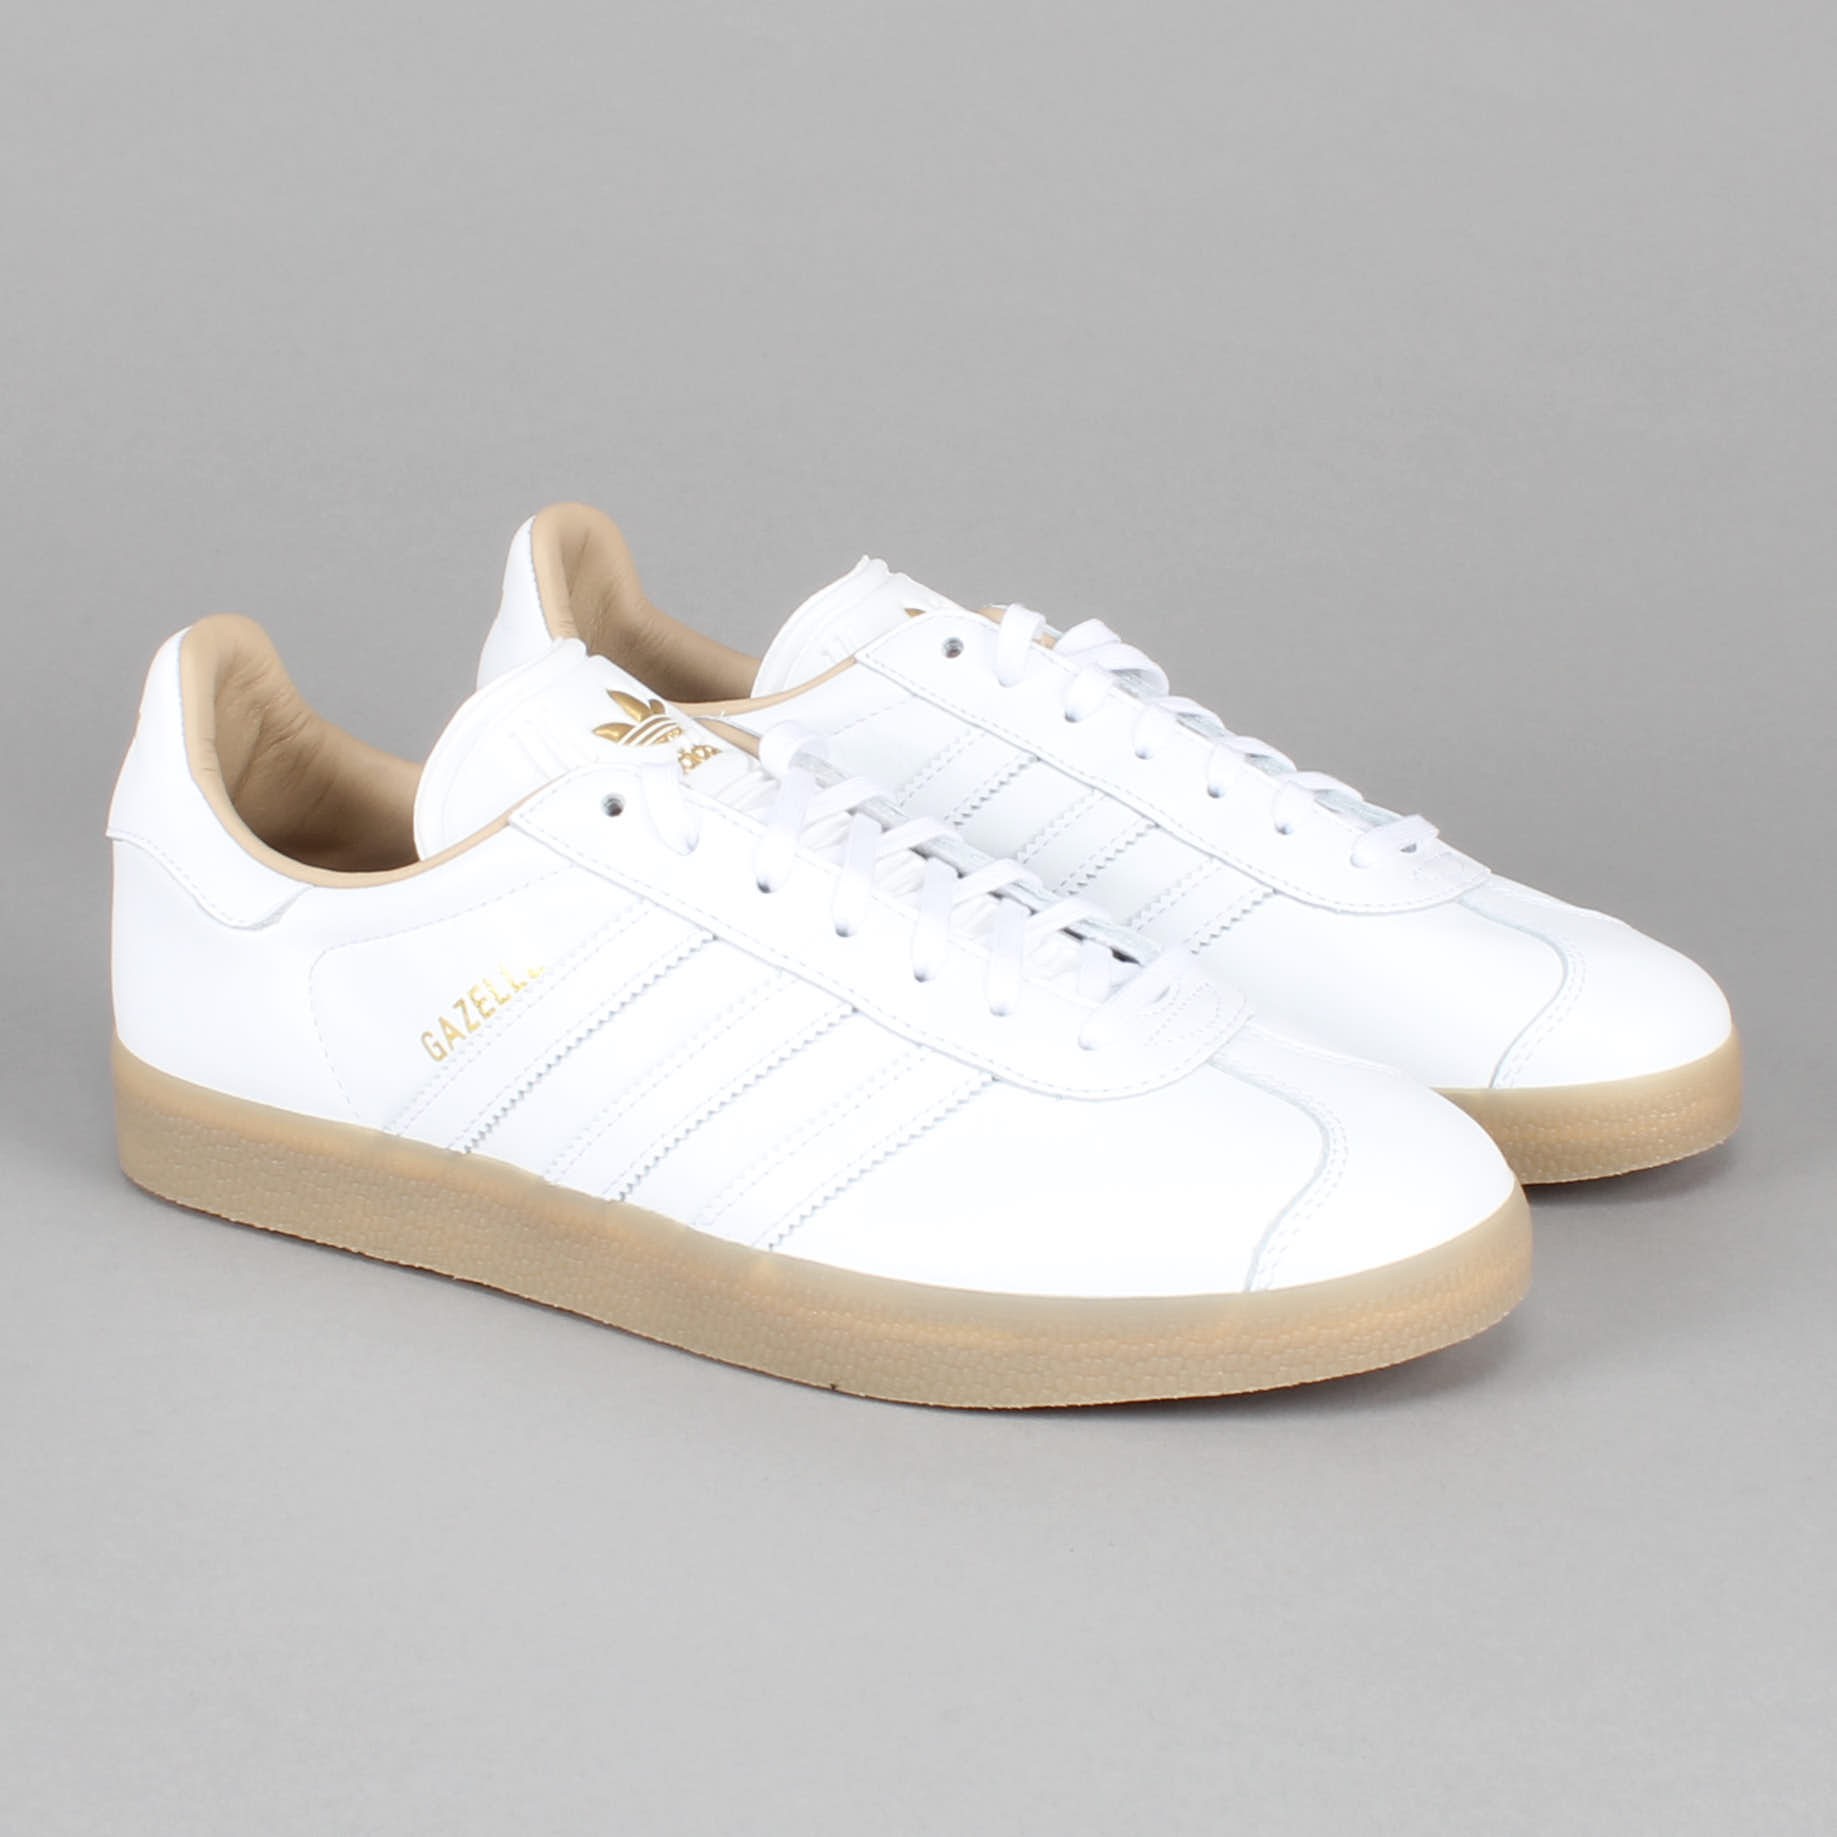 Adidas Gazelle White Leather - New Adidas in Le Fix!